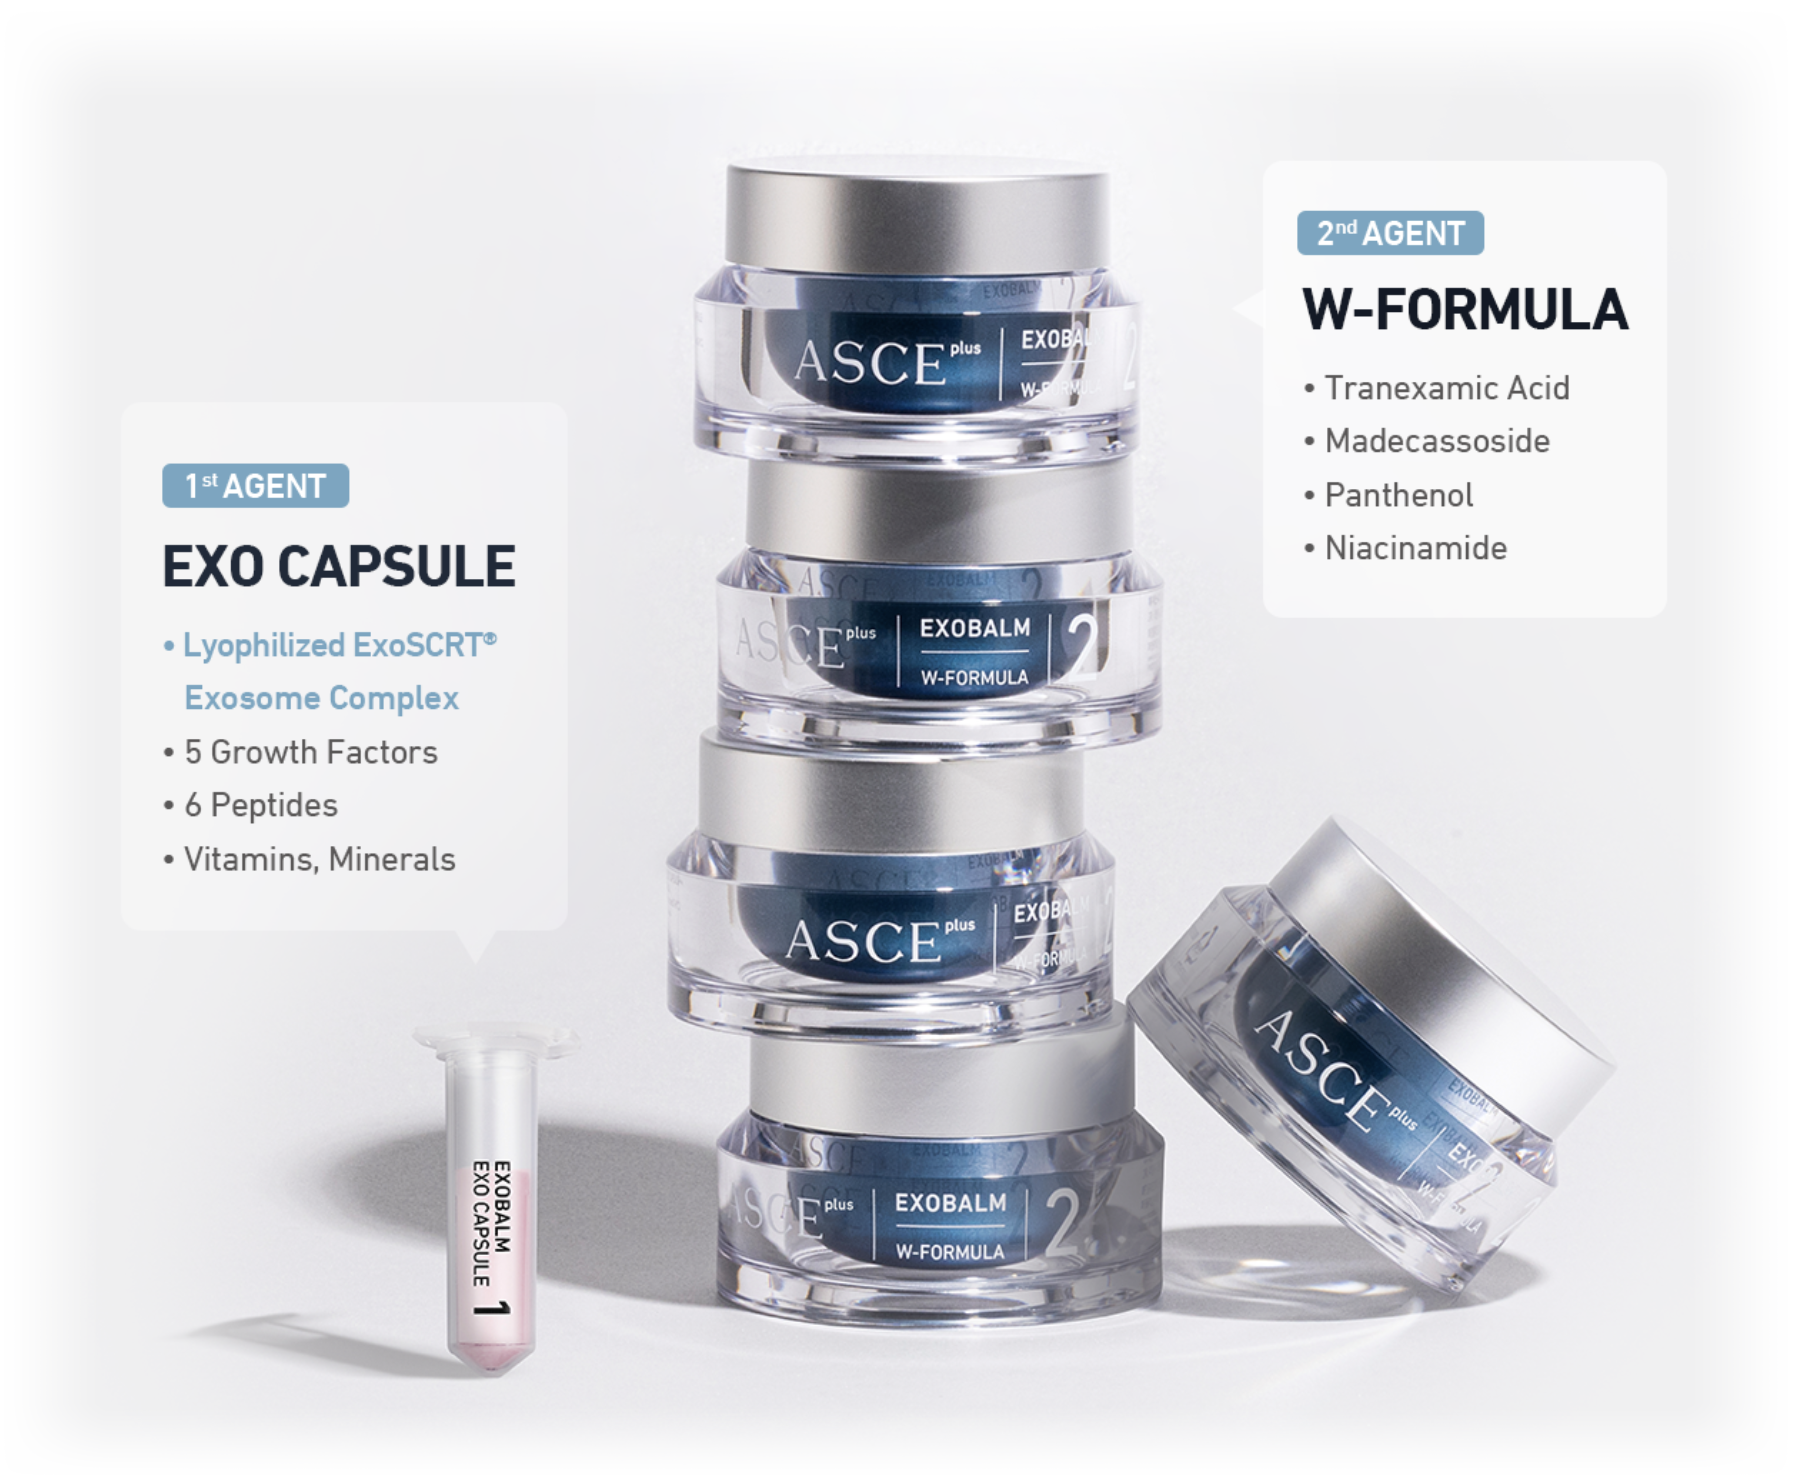 comprar exosomas asceplus exobalm de exocobio belium medical distribuidor oficial españa y portugal